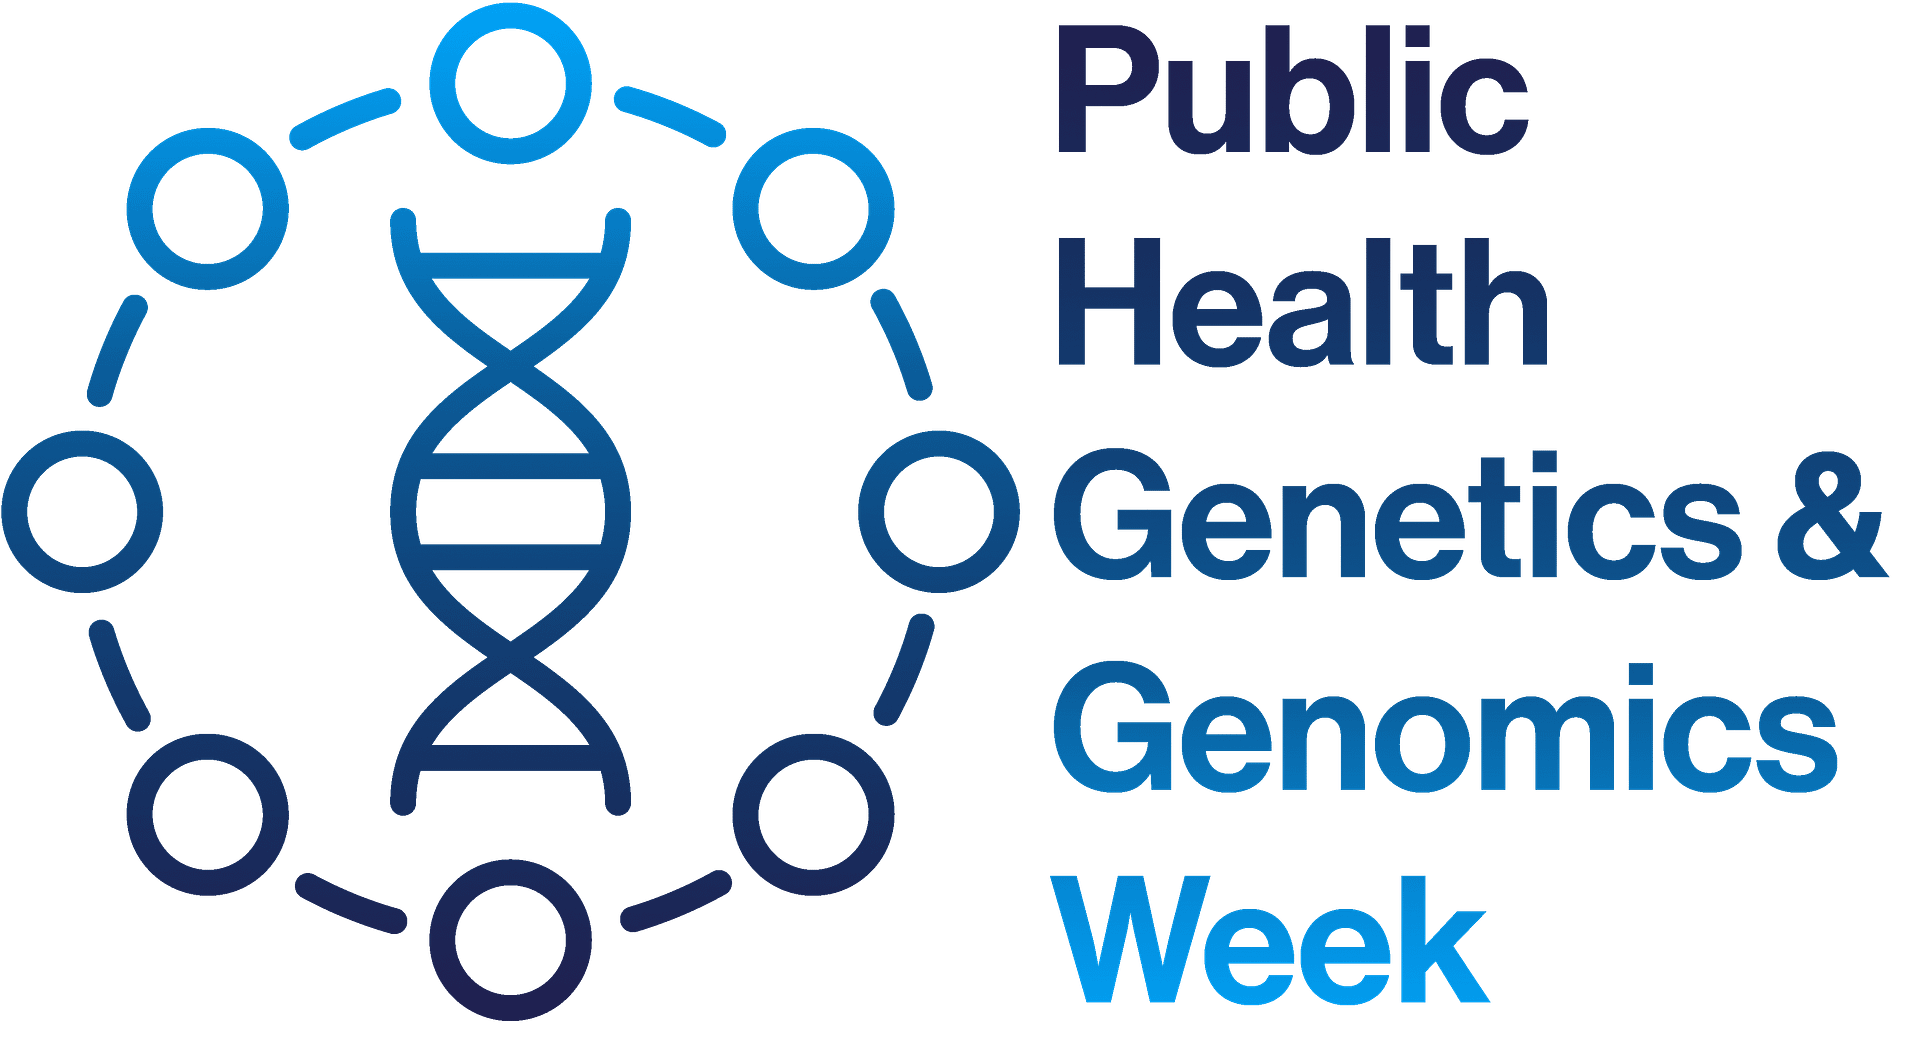 Public Health Genetics and Genomics Week Blue Gradient